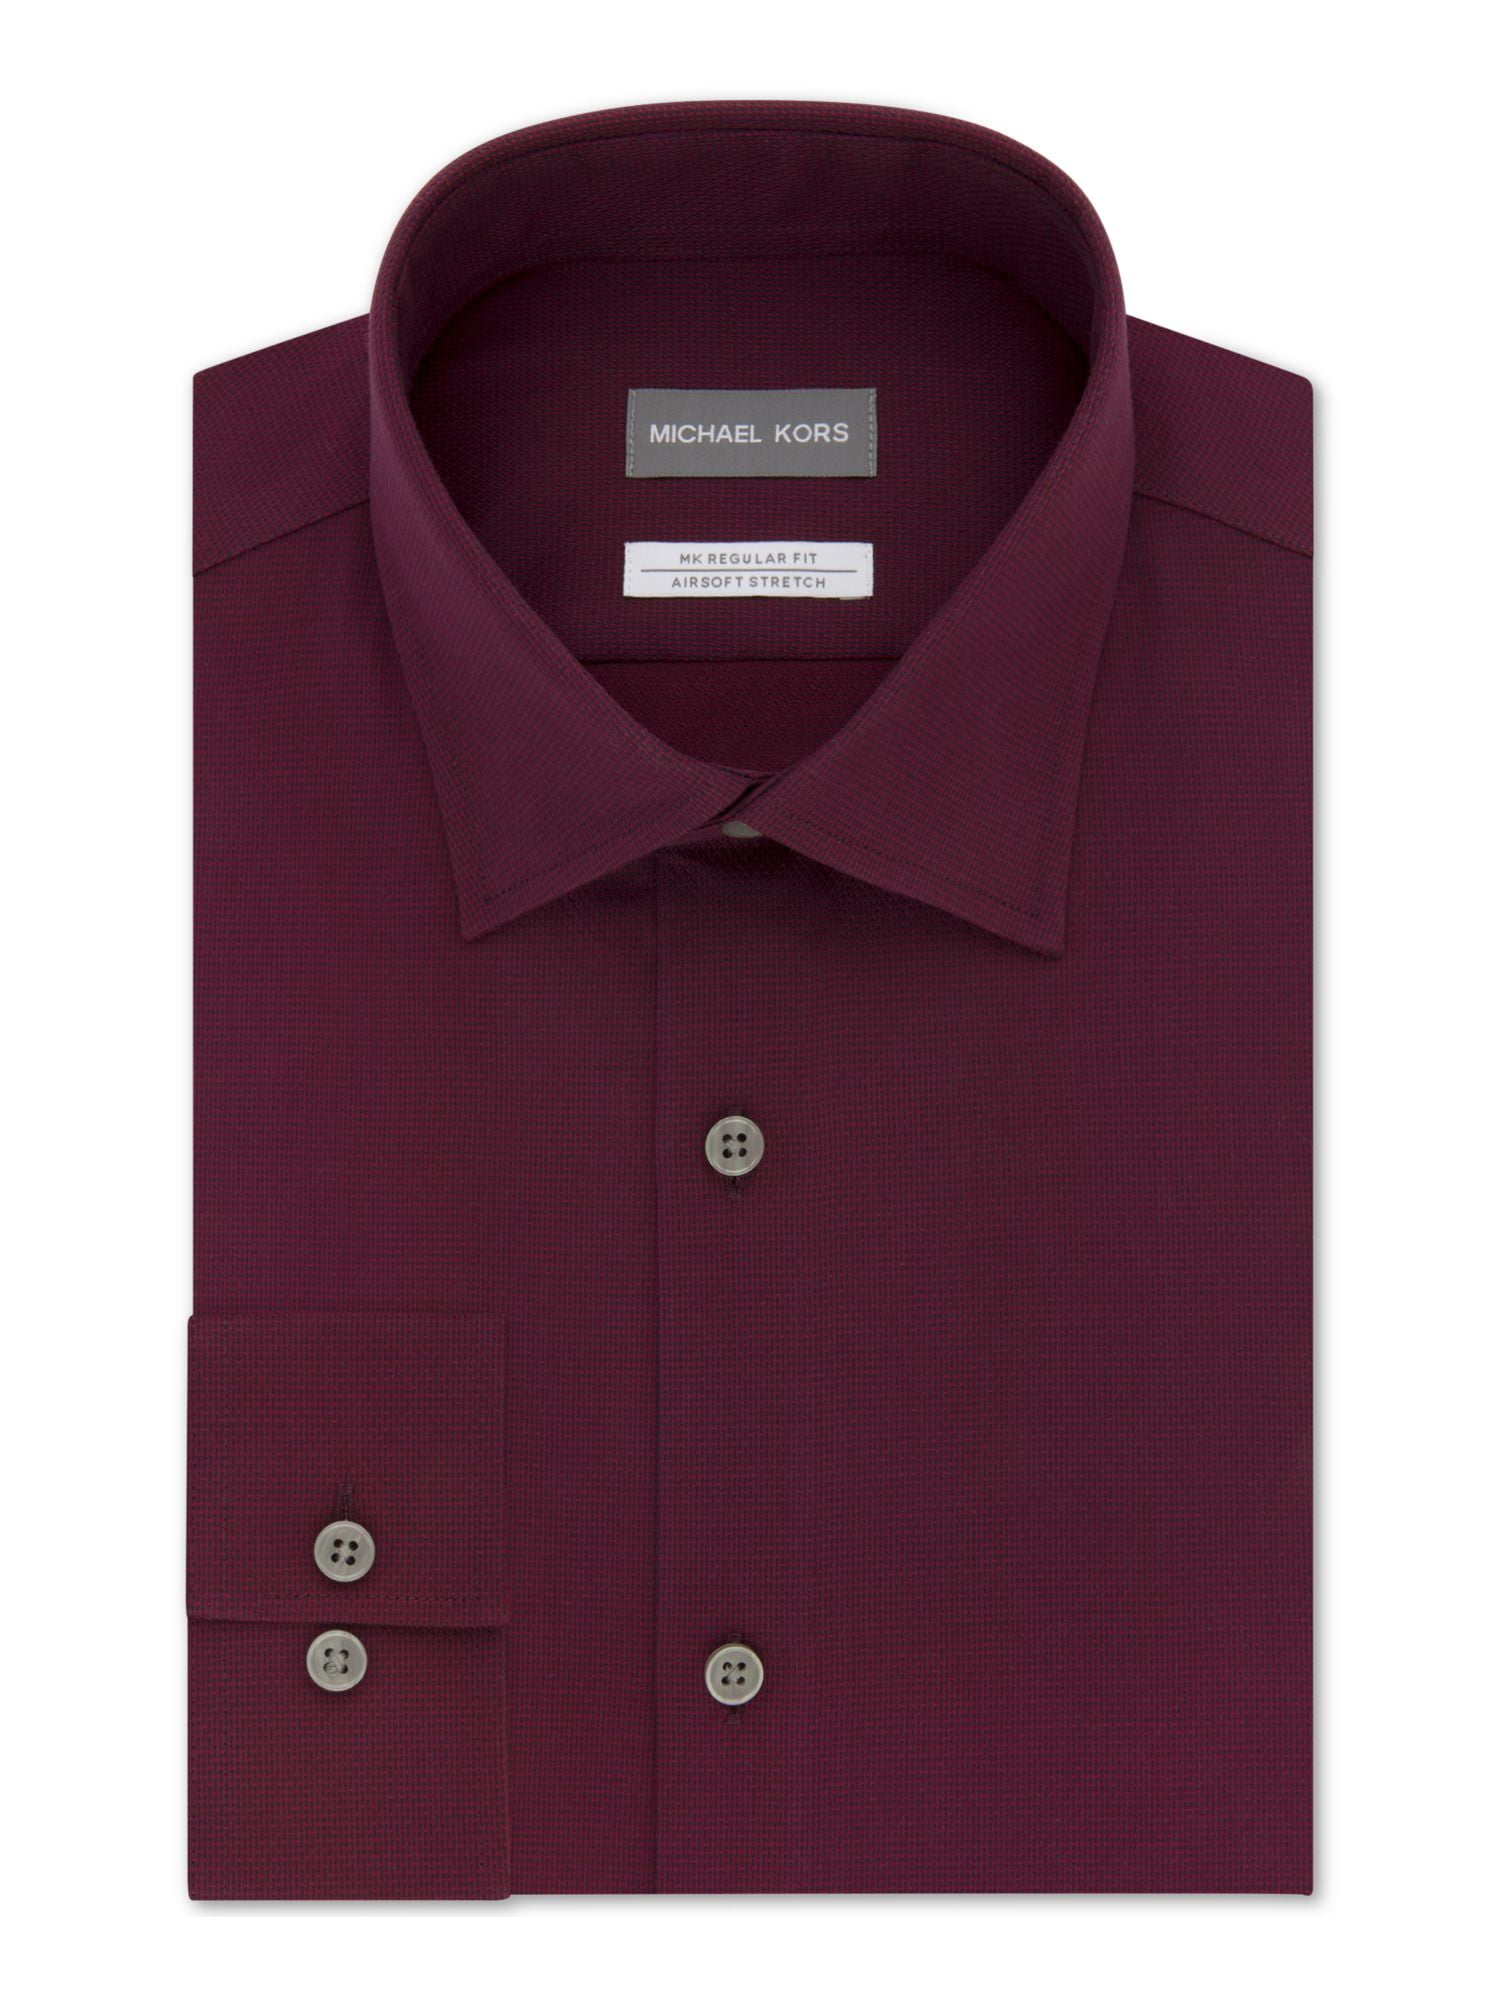 MICHAEL KORS Mens Burgundy Collared Dress Shirt  34/35 